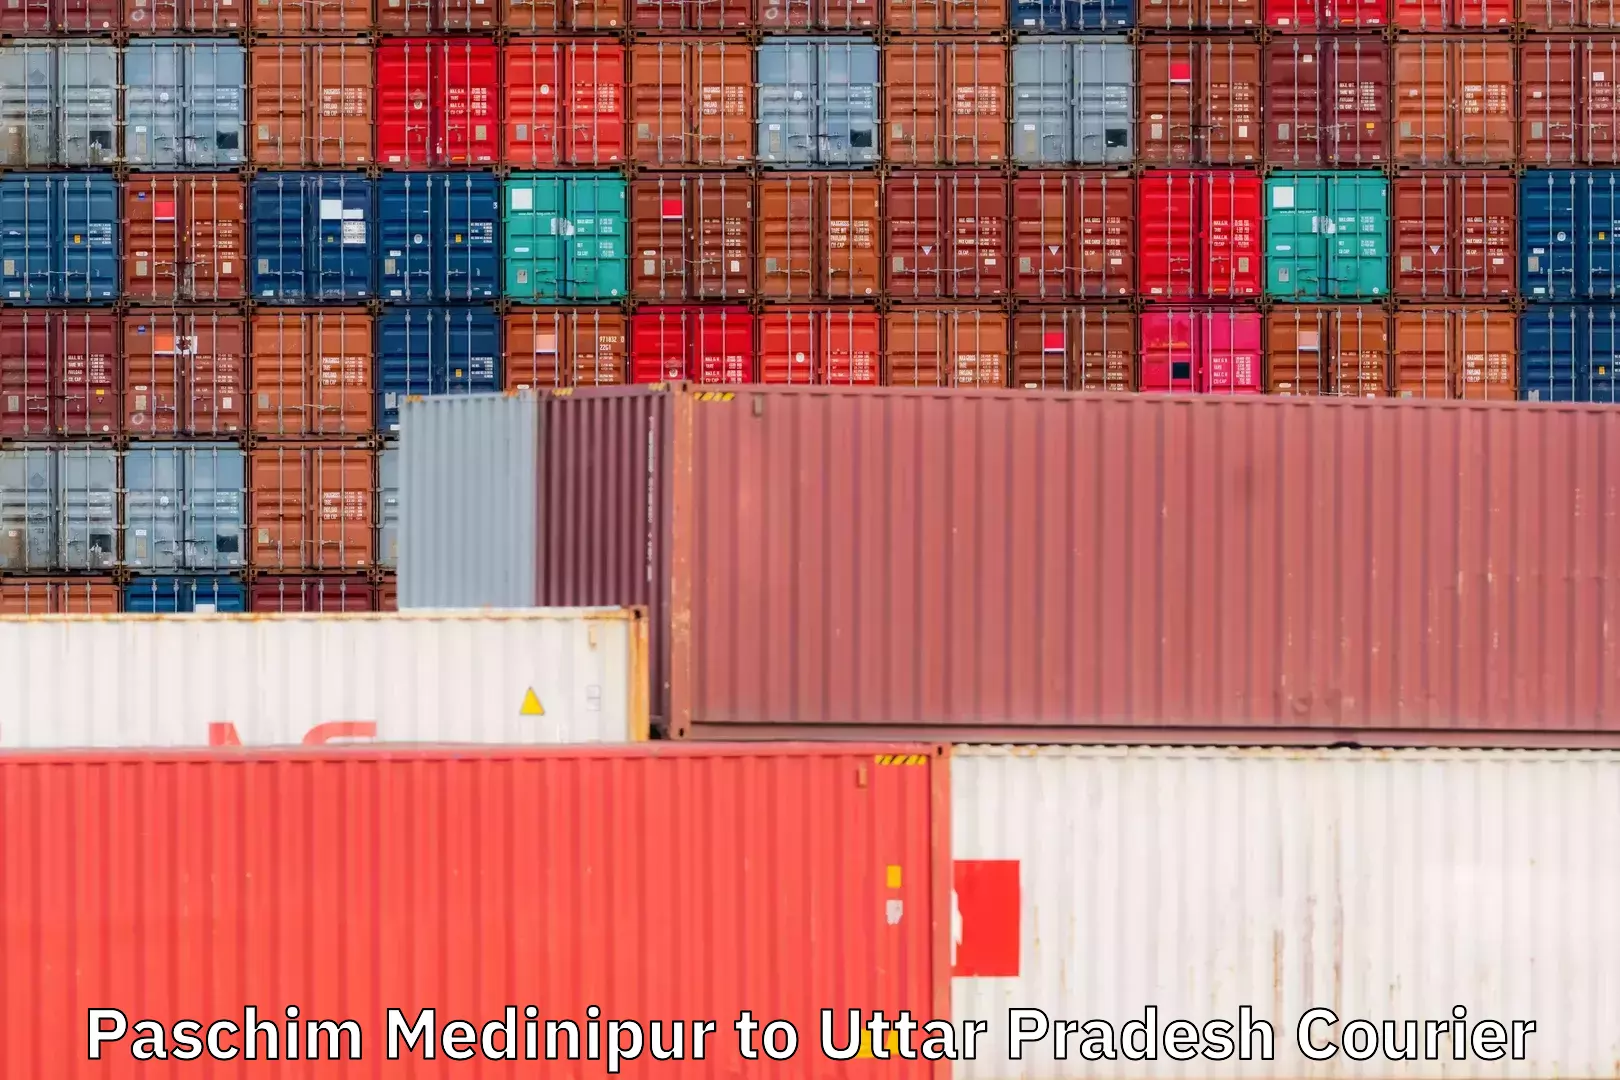 Advanced shipping technology Paschim Medinipur to Uttar Pradesh